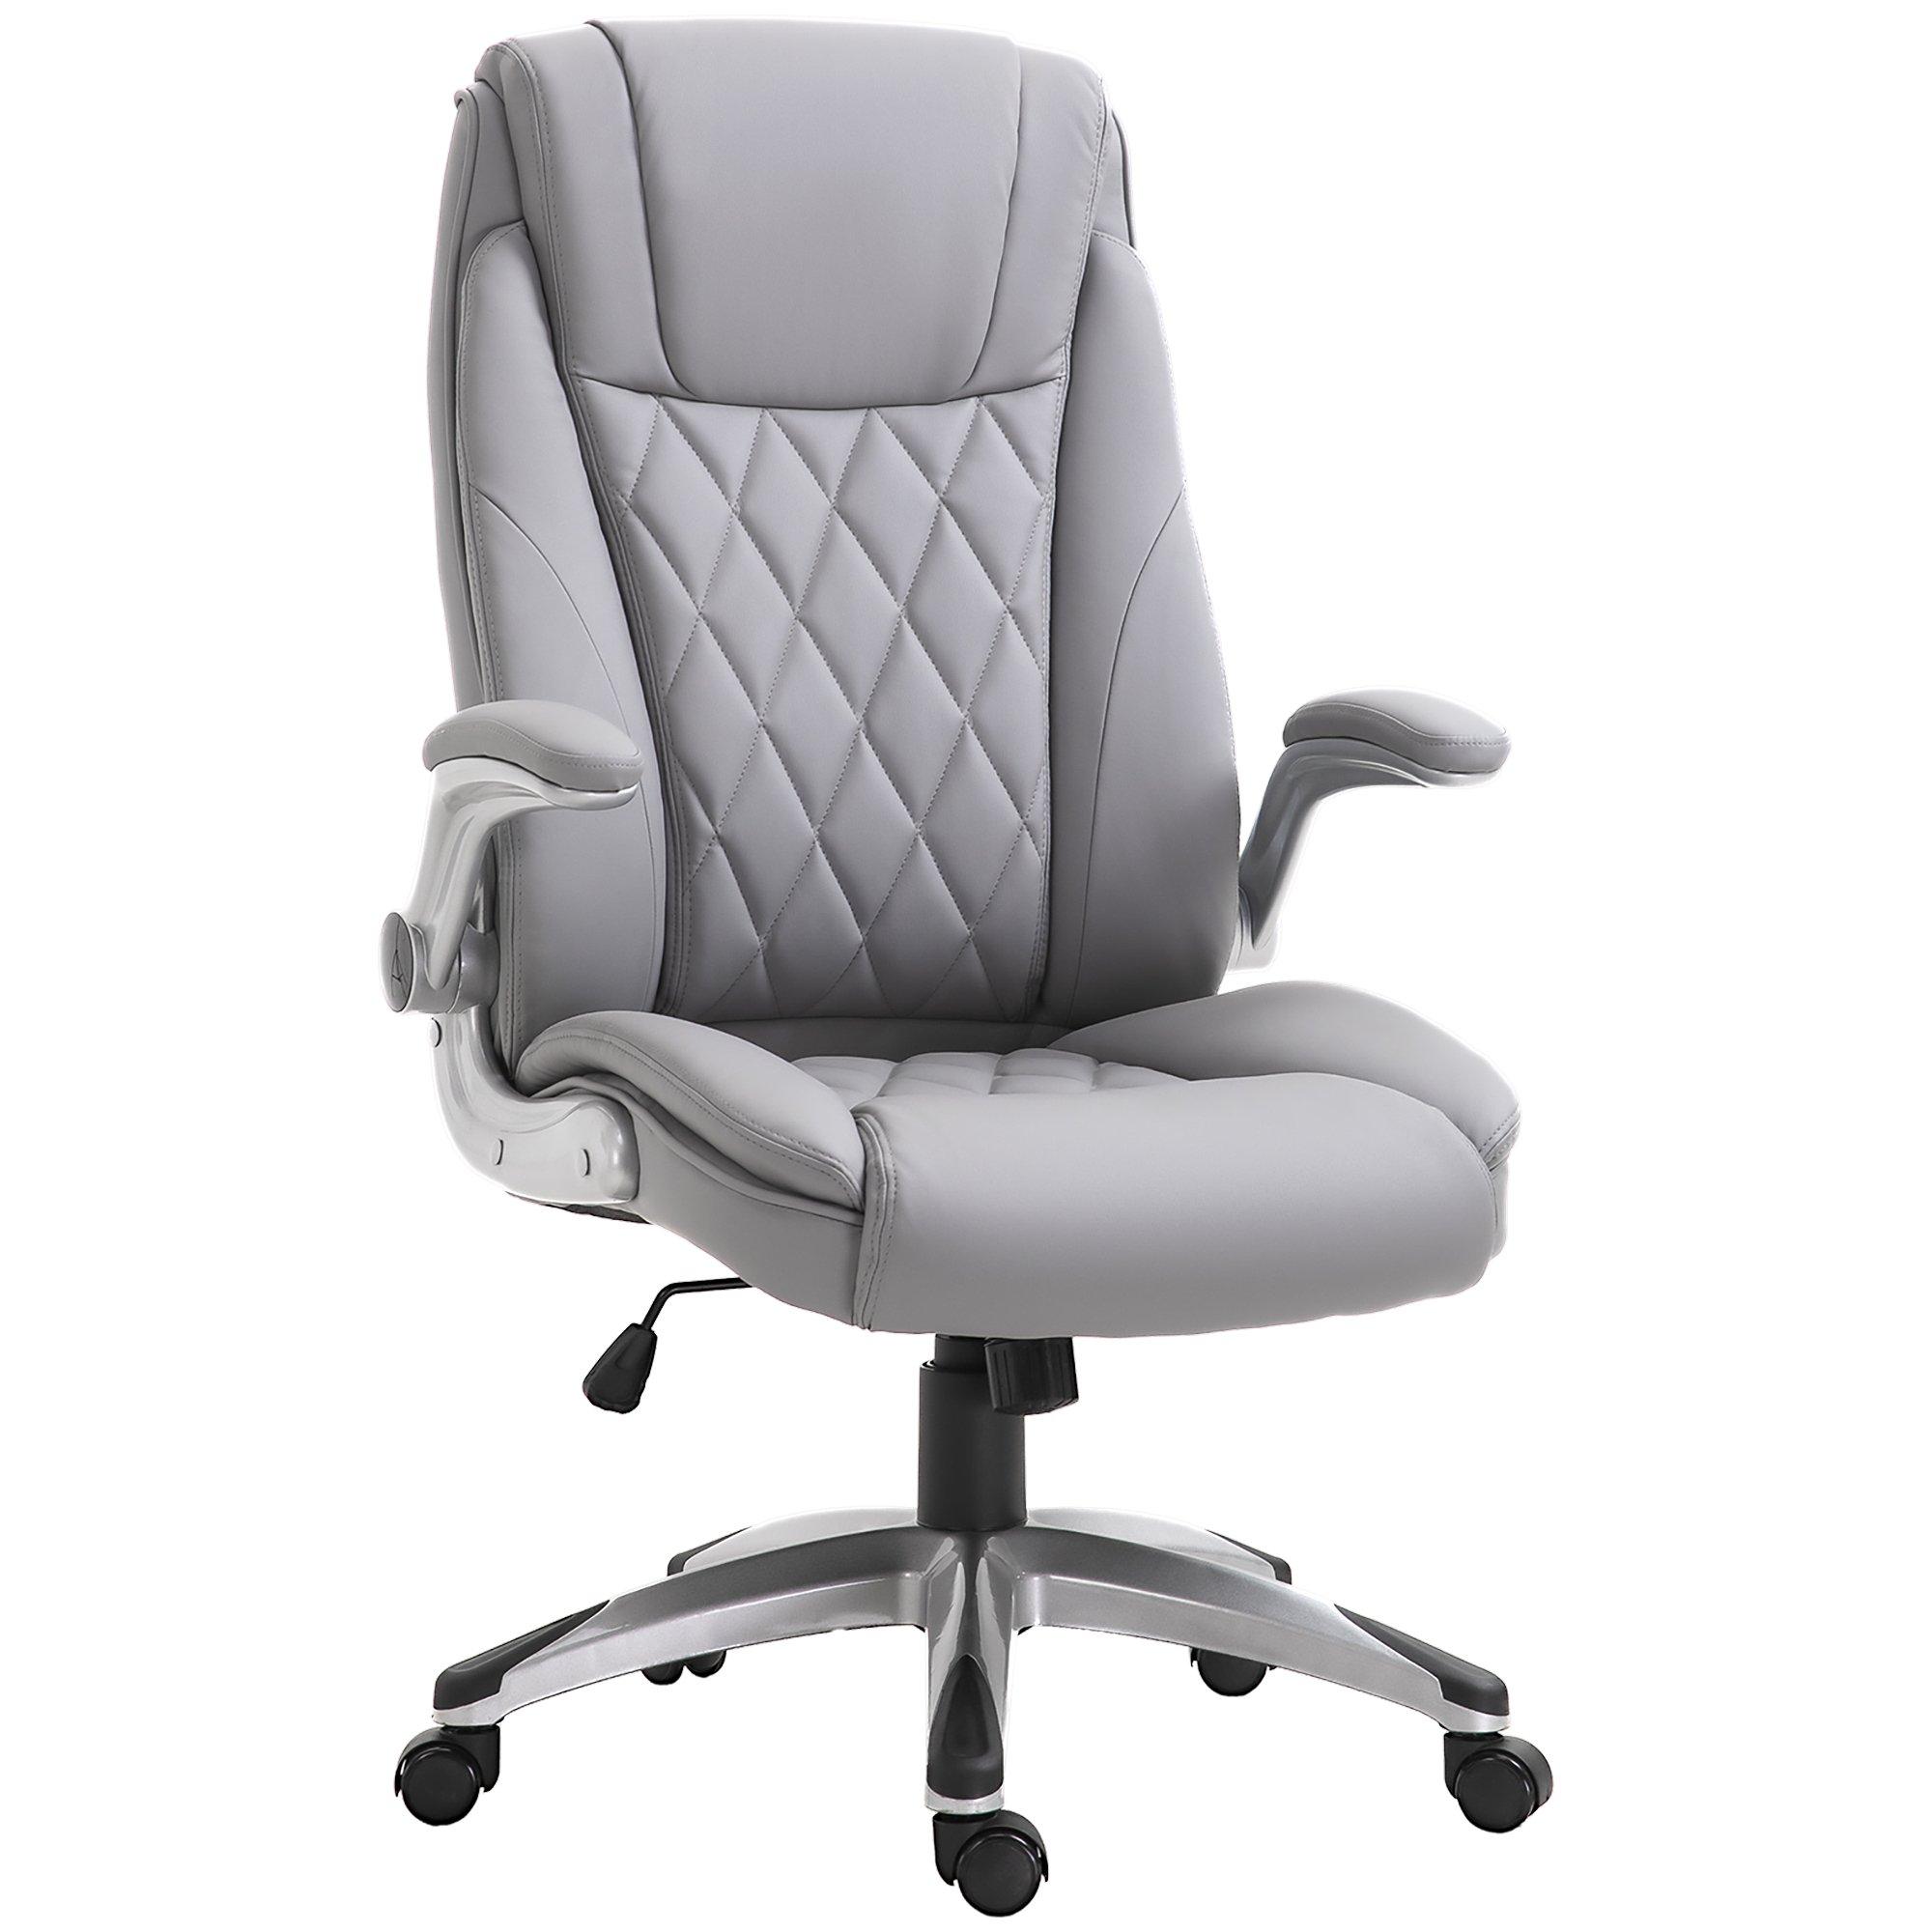 Executive Office Chair Sleek Ergonomic 360 degree Headrest Adjustable